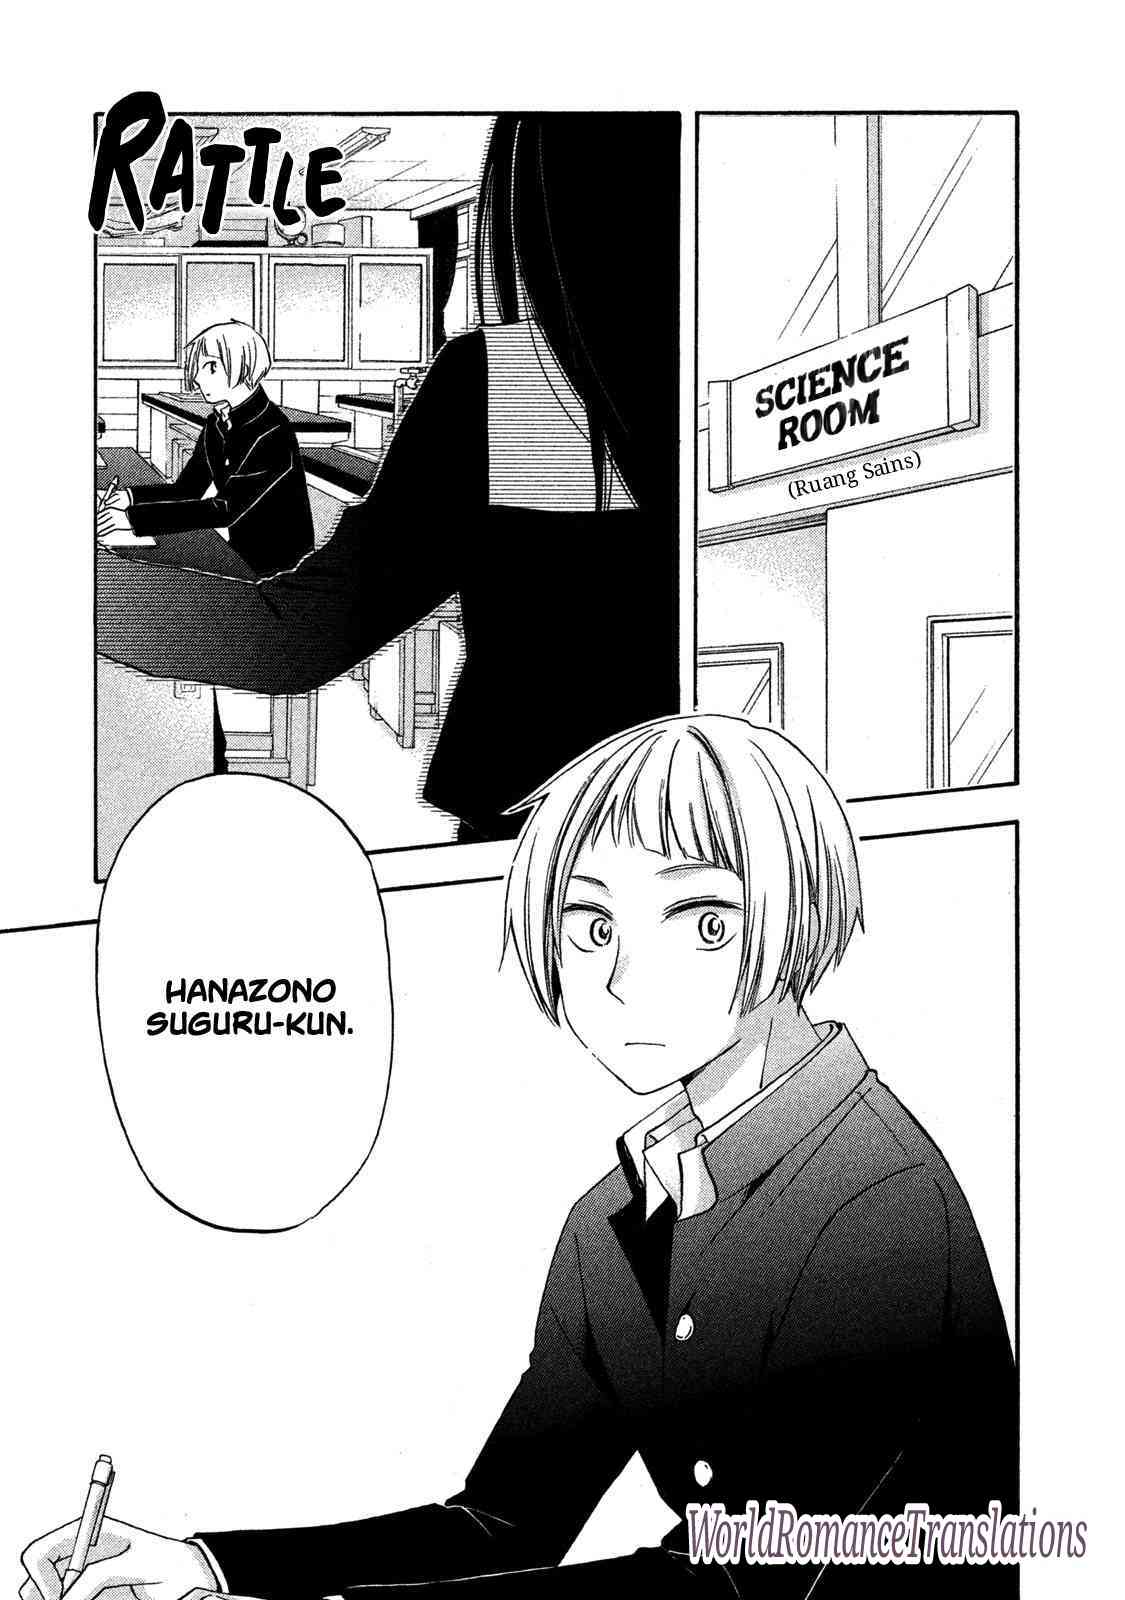 Hanazono and Kazoe’s Bizzare After School Rendezvous Chapter 1